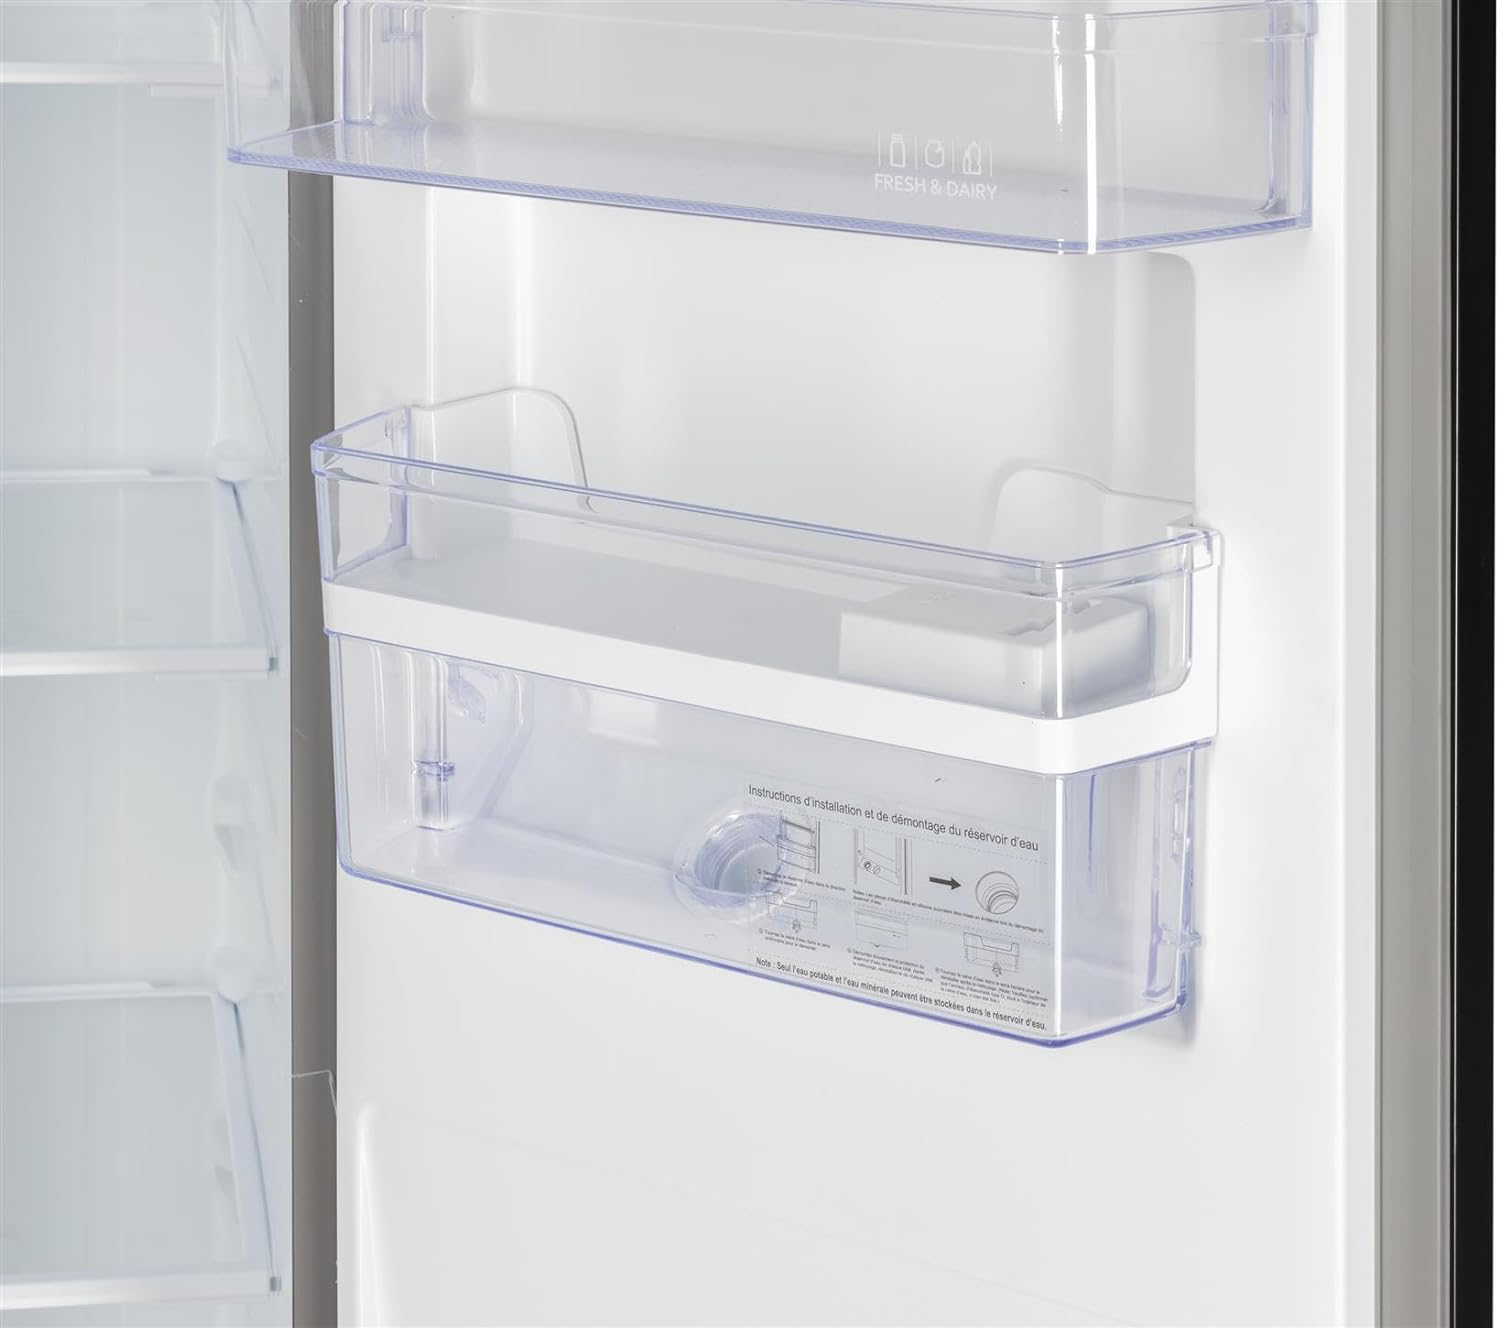 SIA Freestanding 2 Door American Fridge Freezer 627L with Ice & Water Dispenser - Silver - Amazing Gadgets Outlet